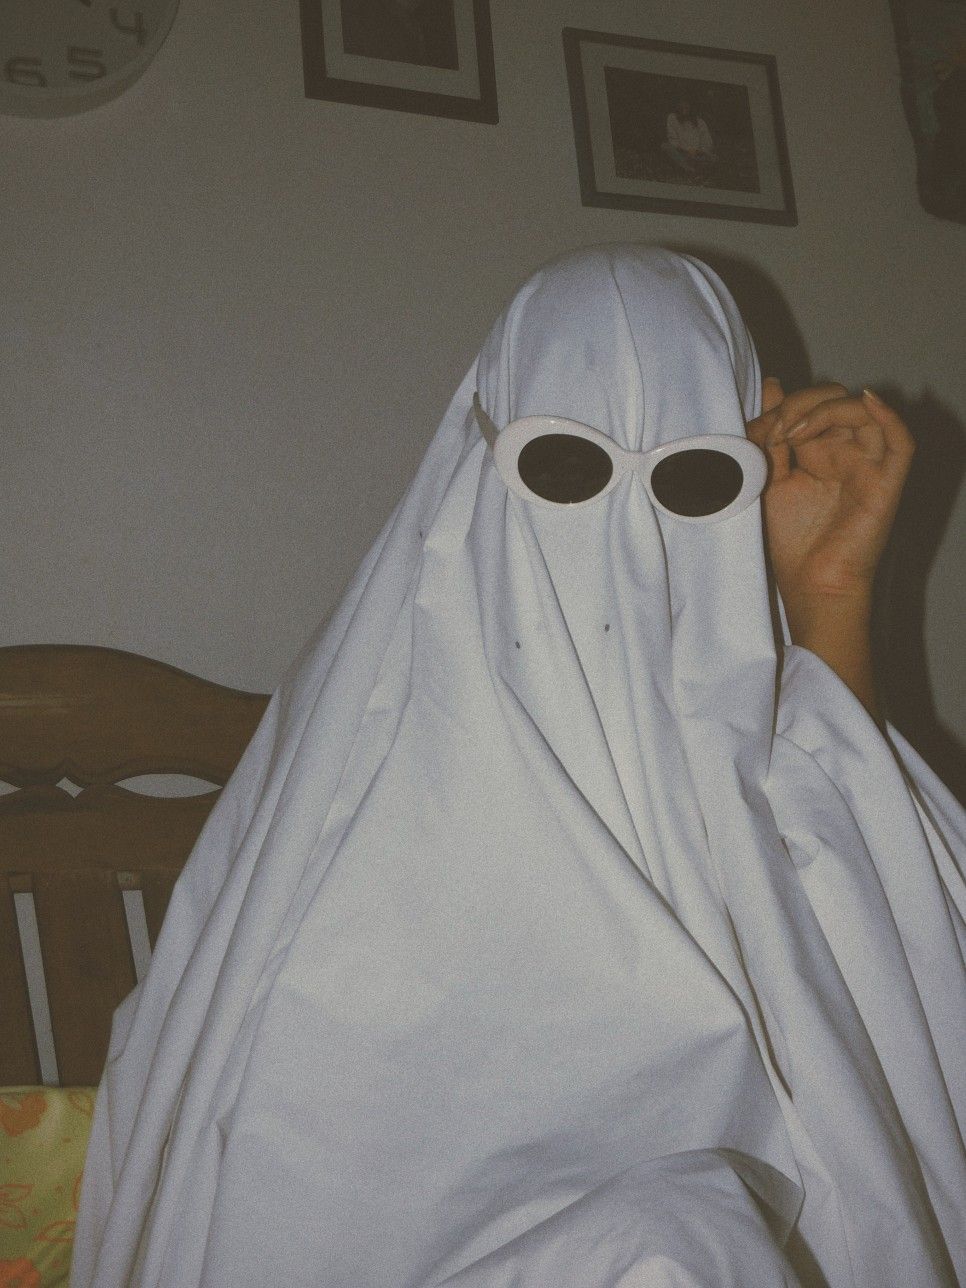 ghost photohoot tiktok trend. Ghost photography, Photohoot, Ghost photo